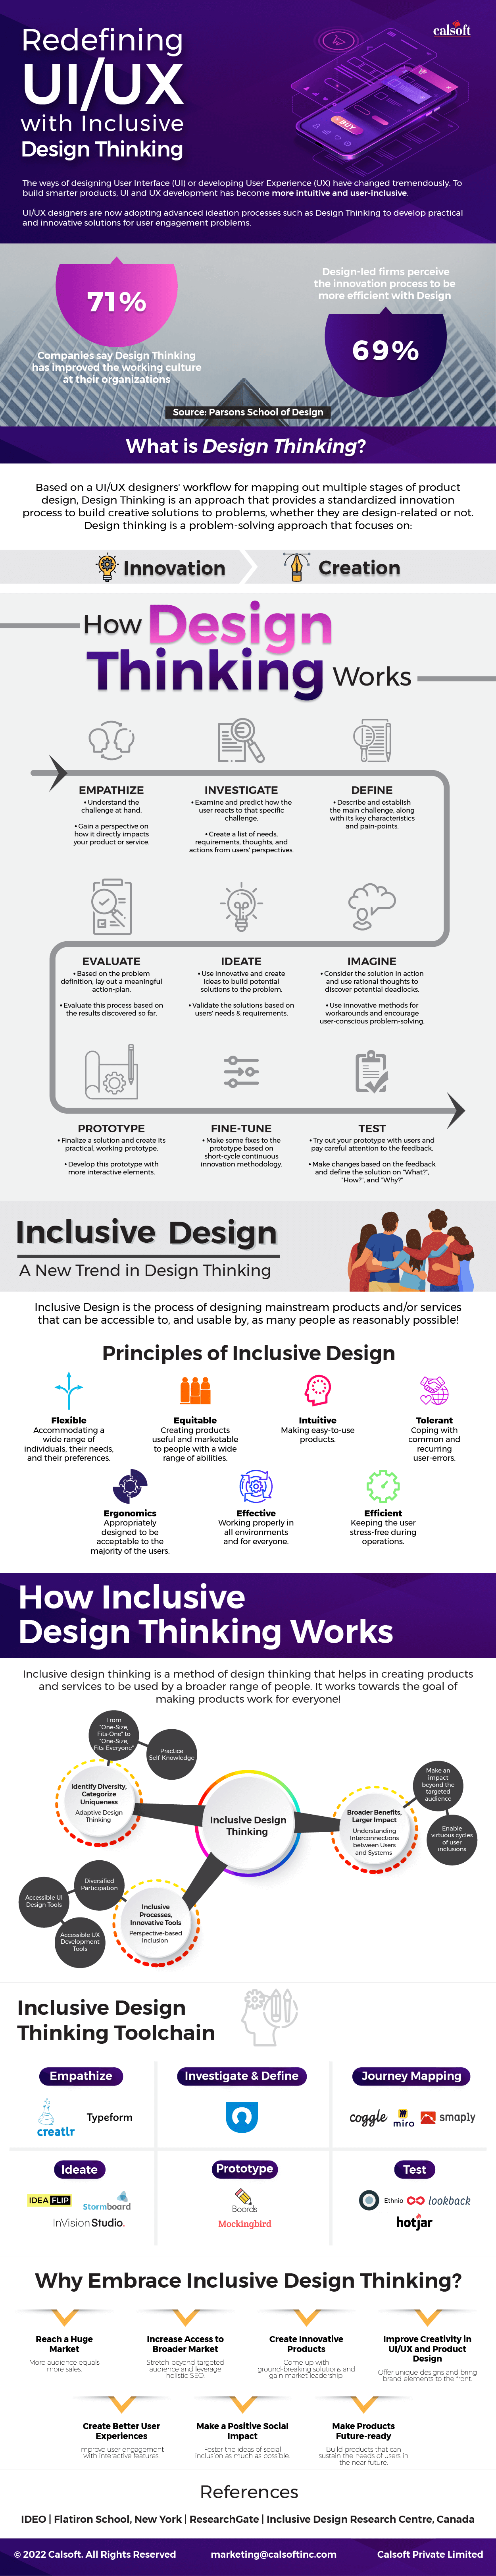 [Info-Blog] Inclusive Design Thinking Calsoft 